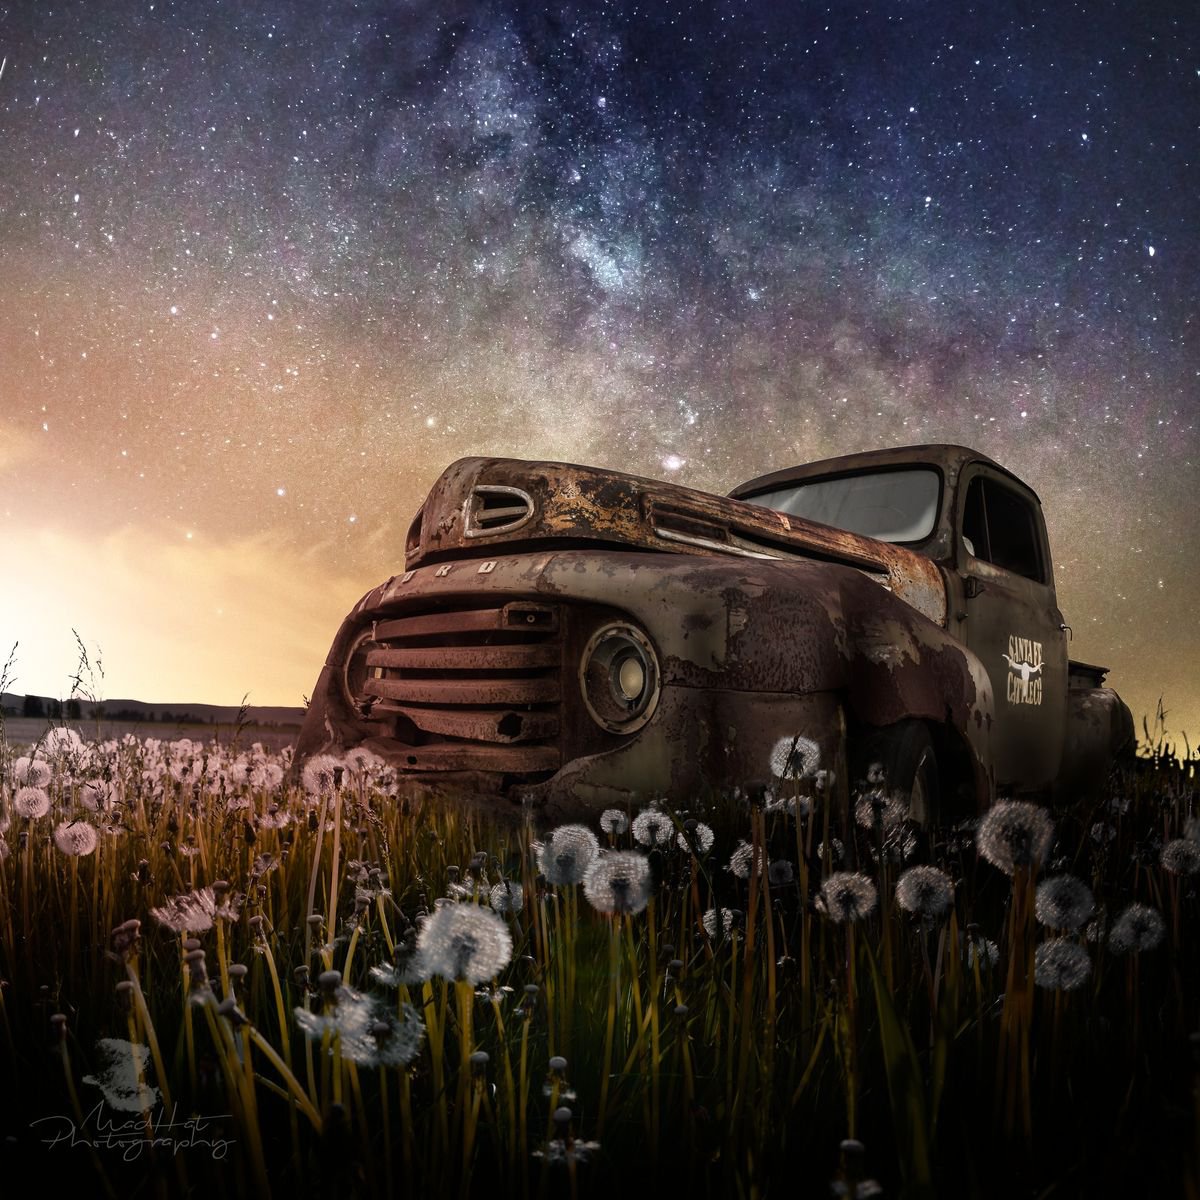 Rusty truck under the stars by Gaz Prescott